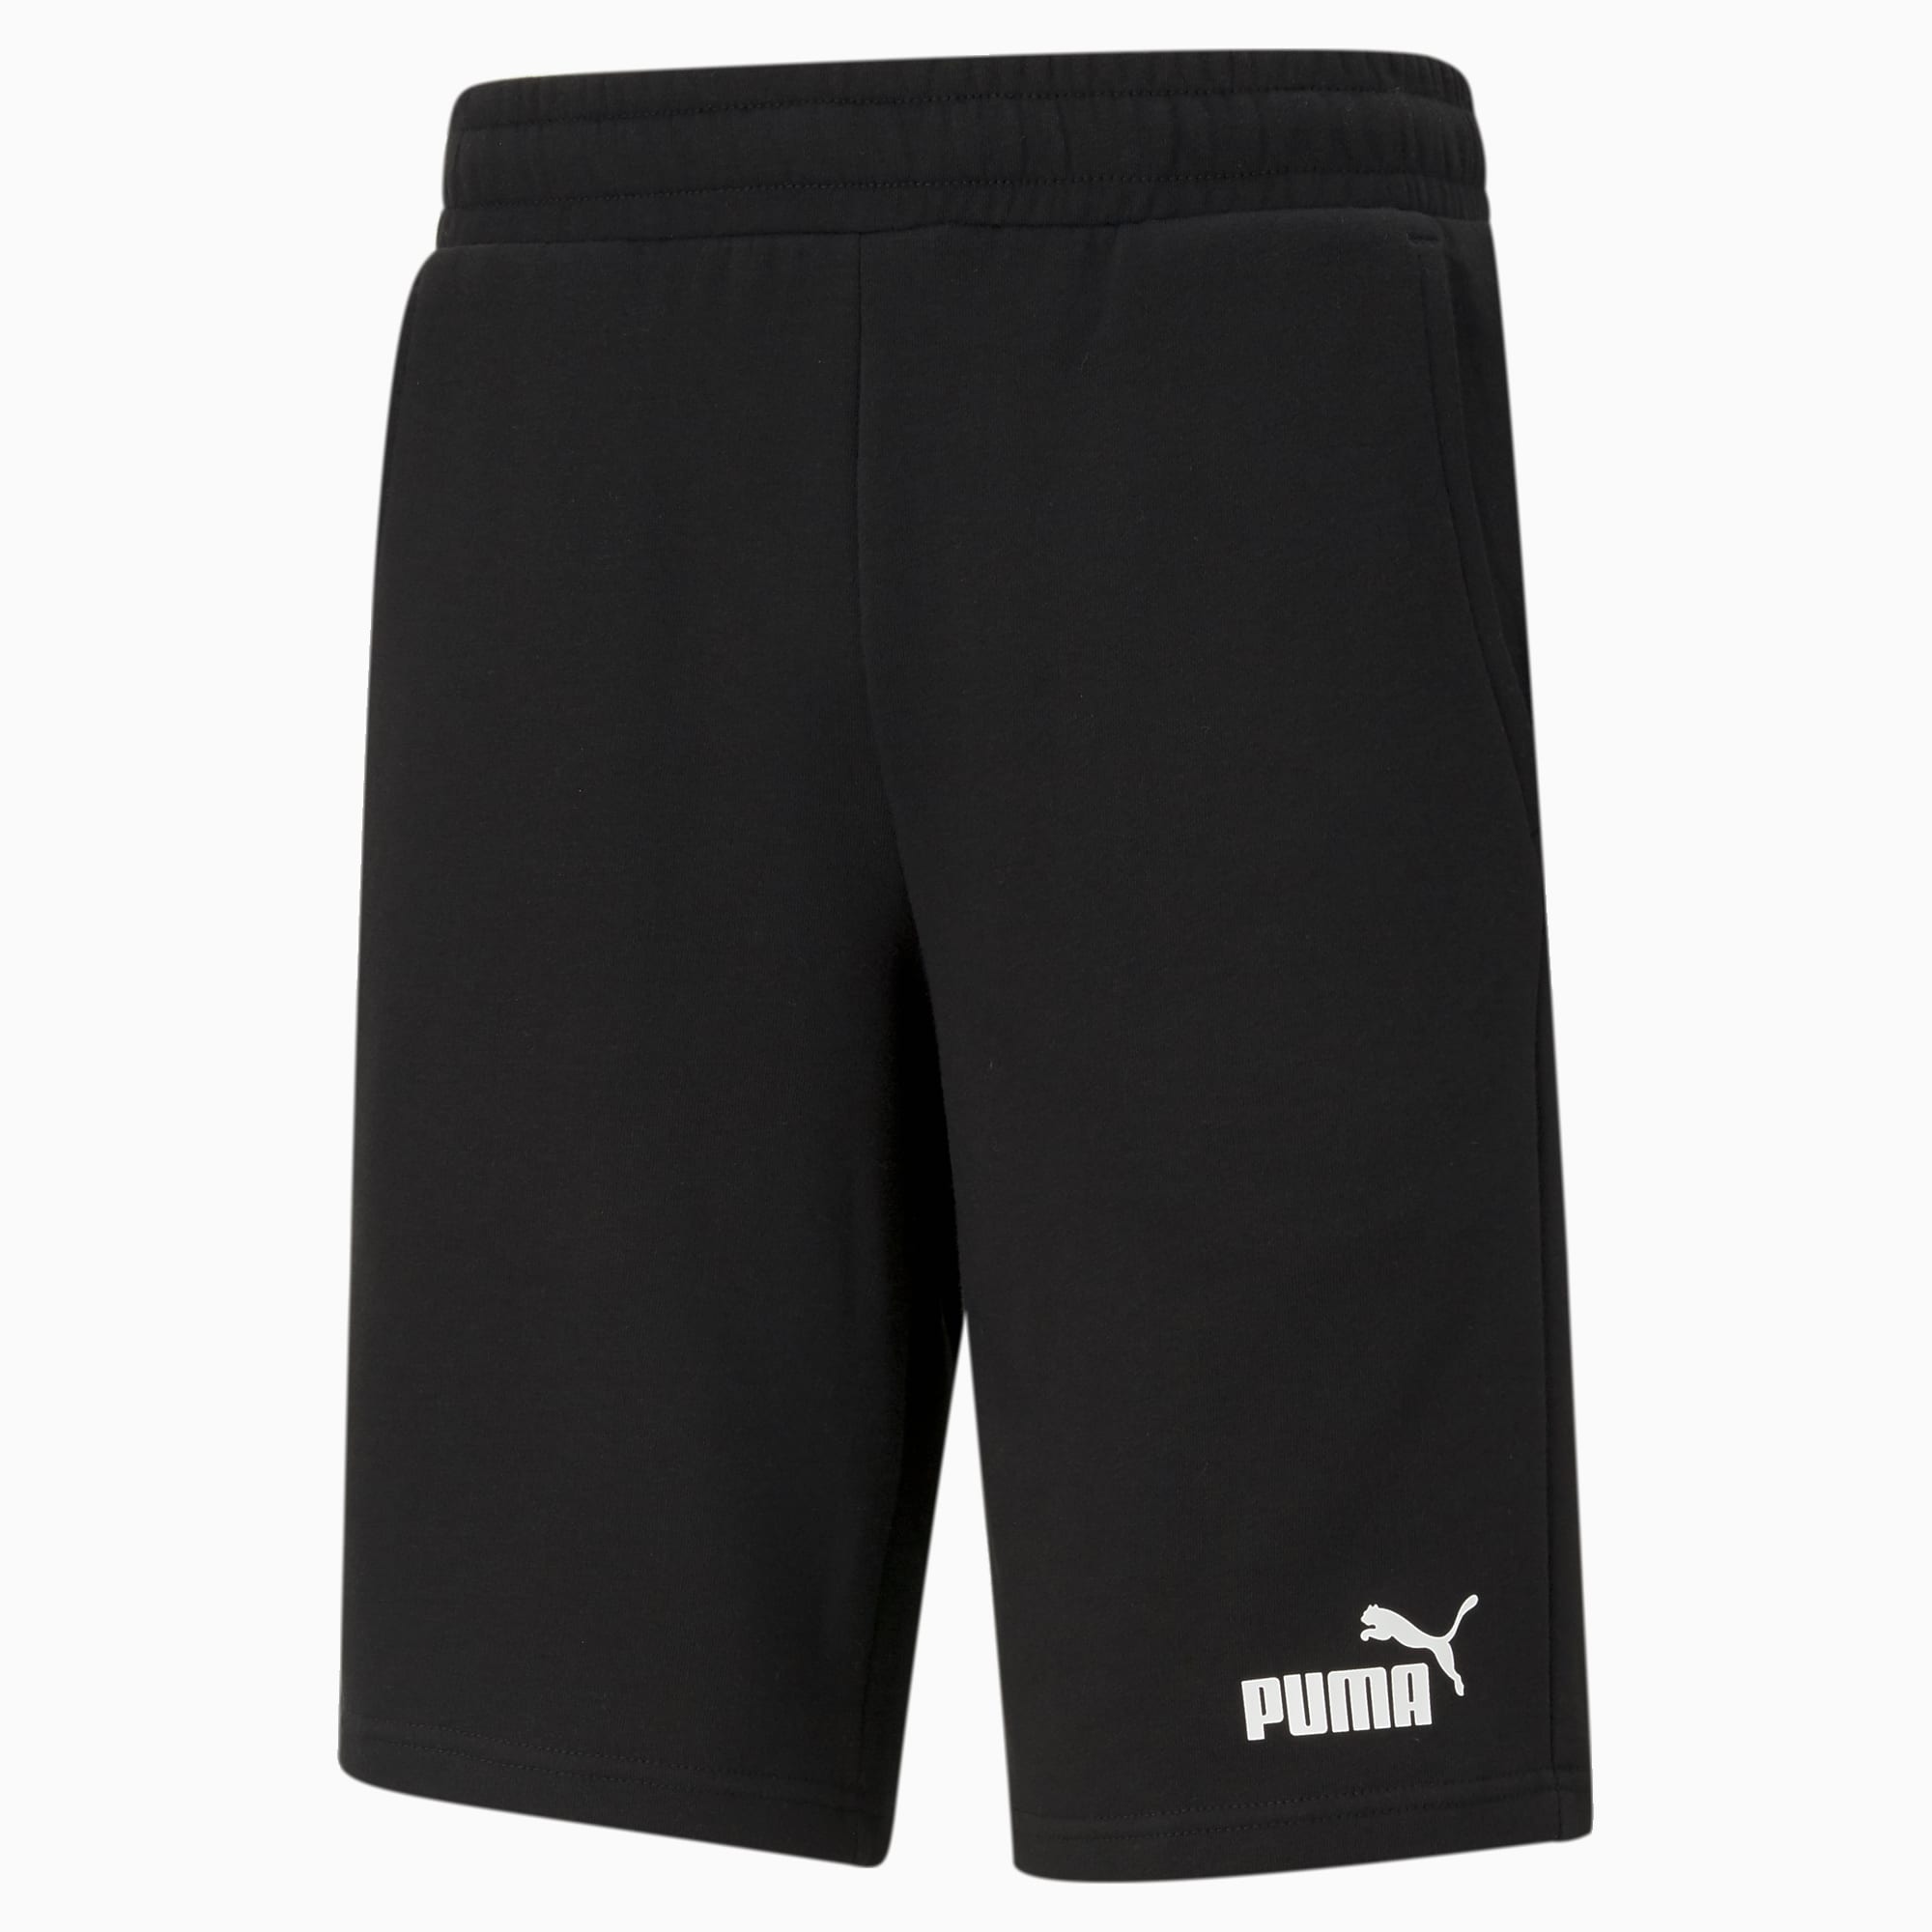 Puma essentials legging shorts in ochre